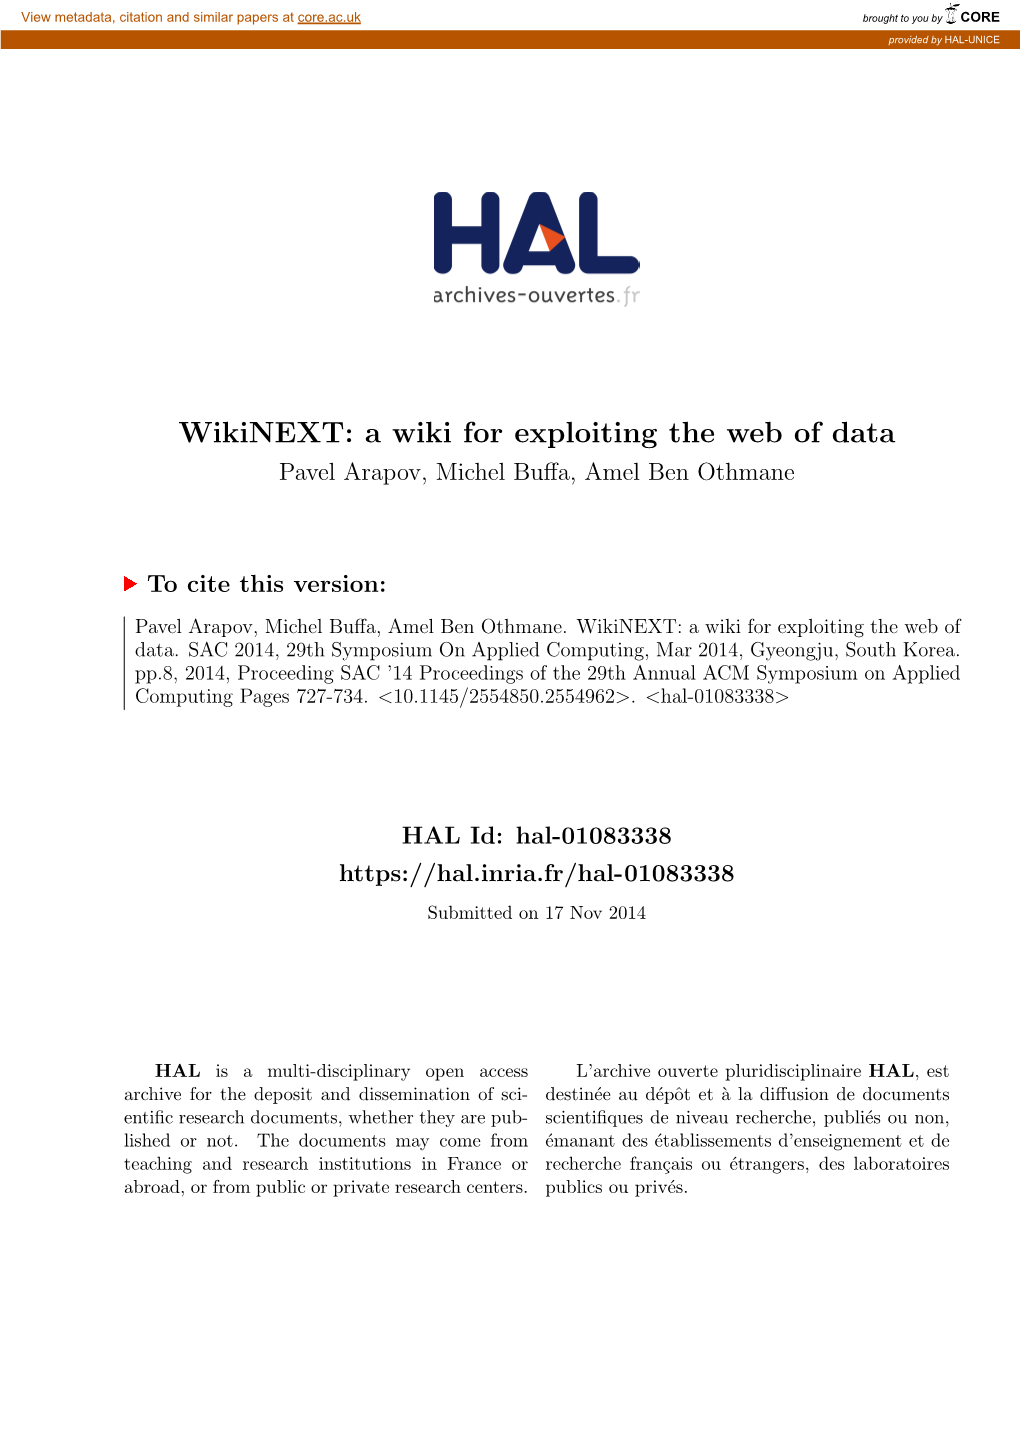 Wikinext: a Wiki for Exploiting the Web of Data Pavel Arapov, Michel Buﬀa, Amel Ben Othmane